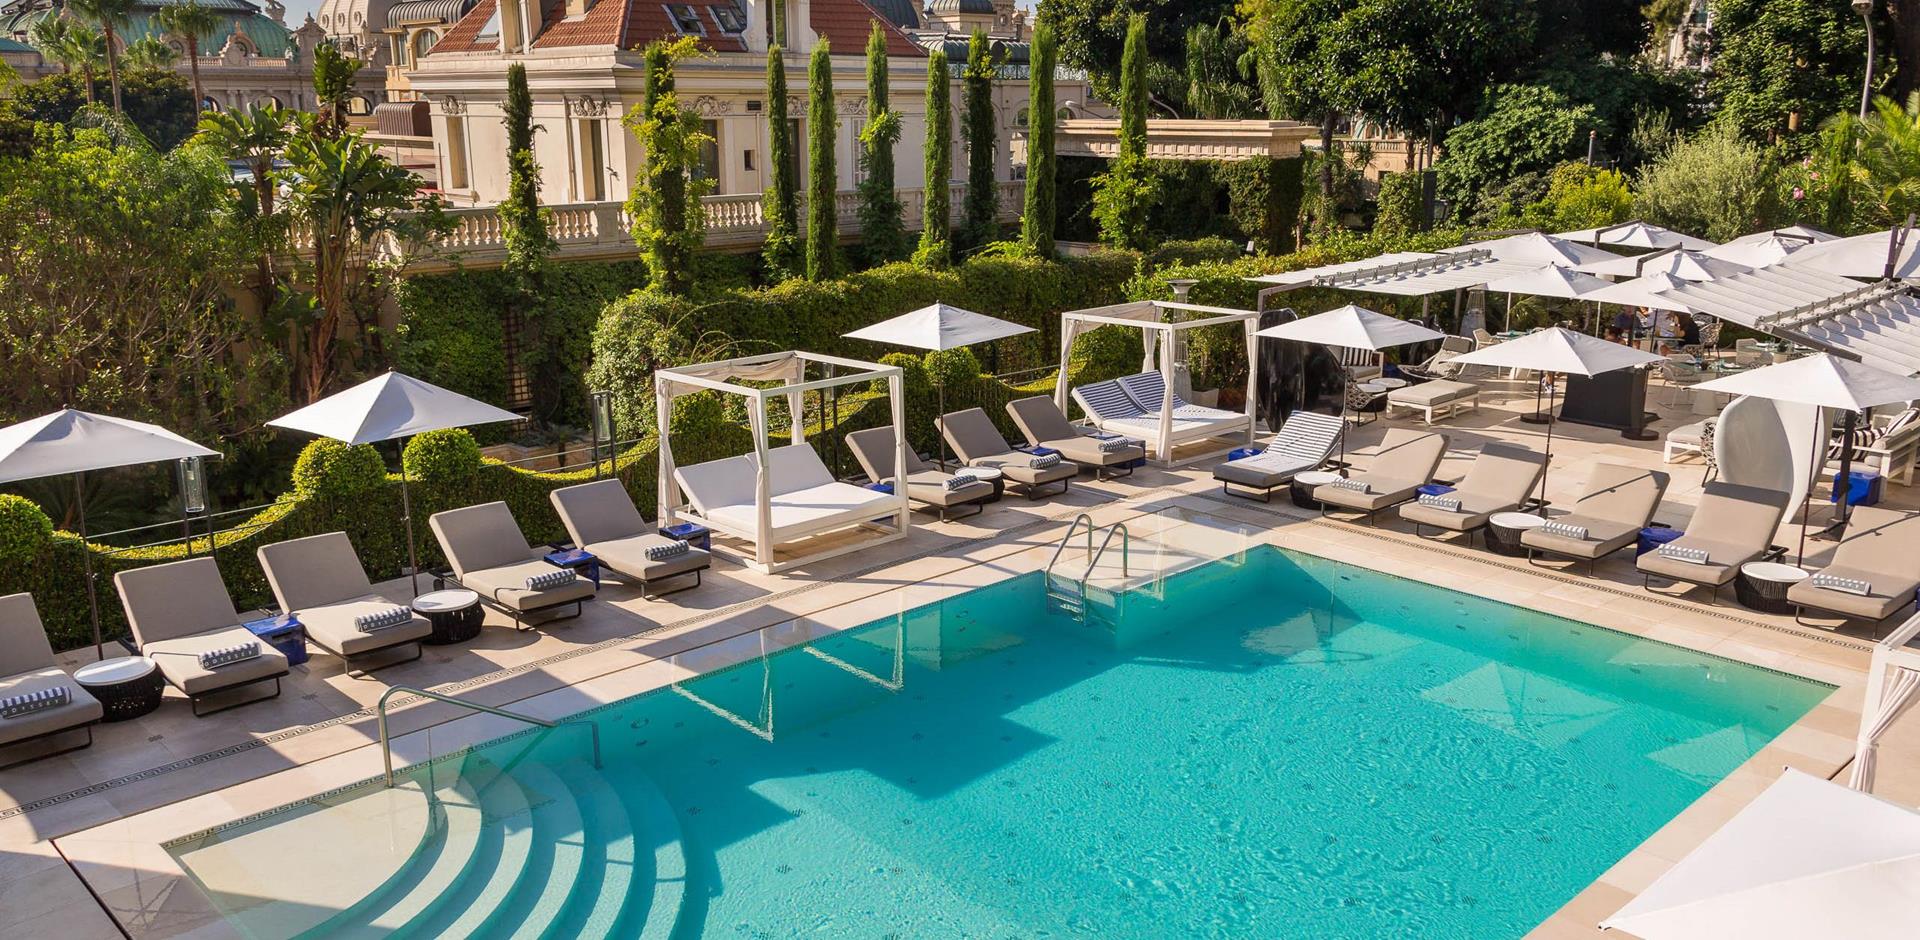 Hôtel Metropole Monte-Carlo Pool, France